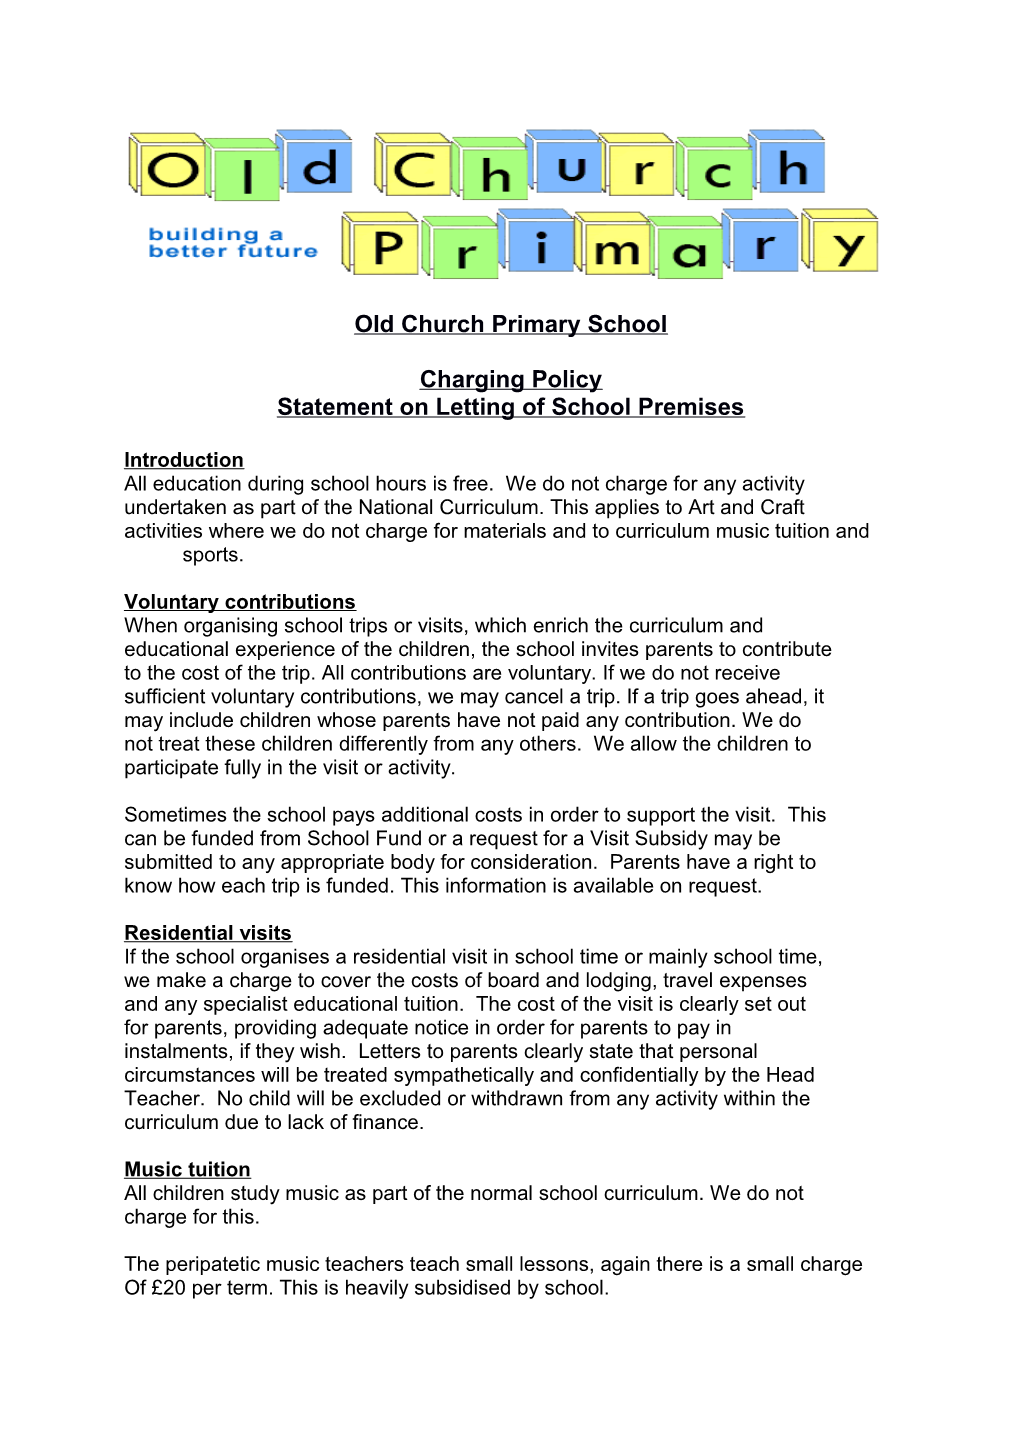 Statement on Letting of School Premises